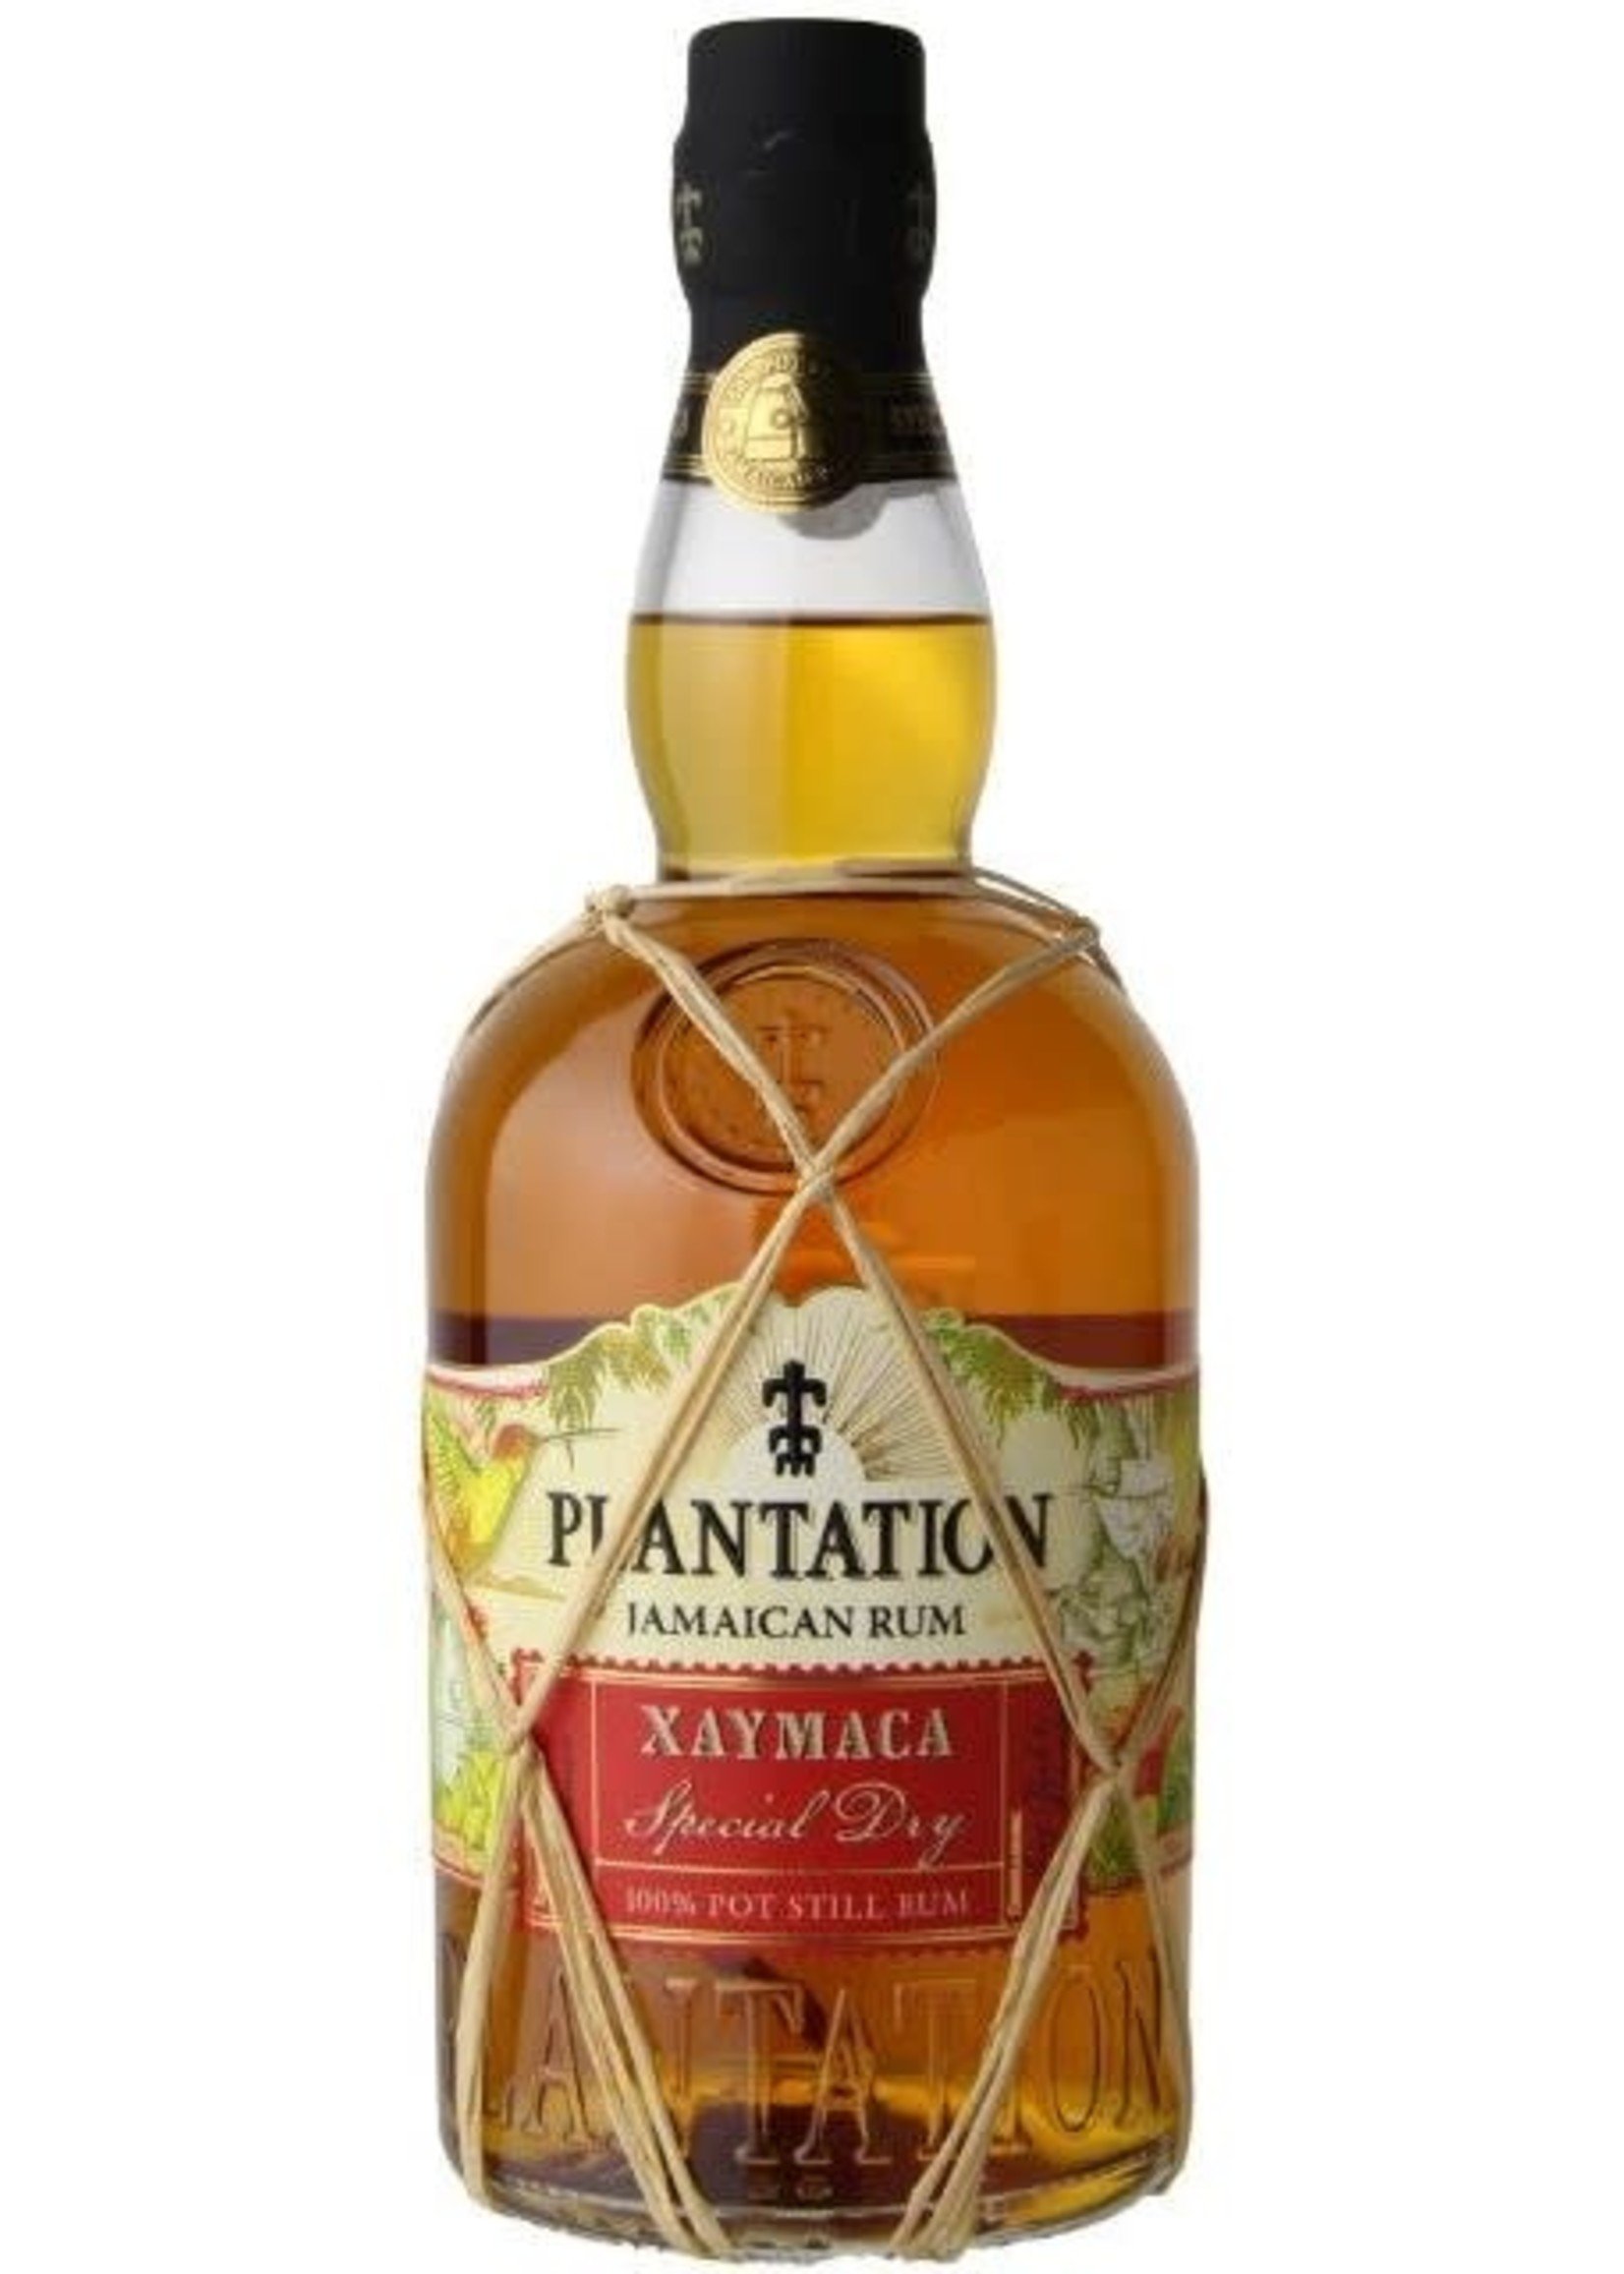 Plantation Plantation Rum / Xaymaca Special Dry Rum / 750mL